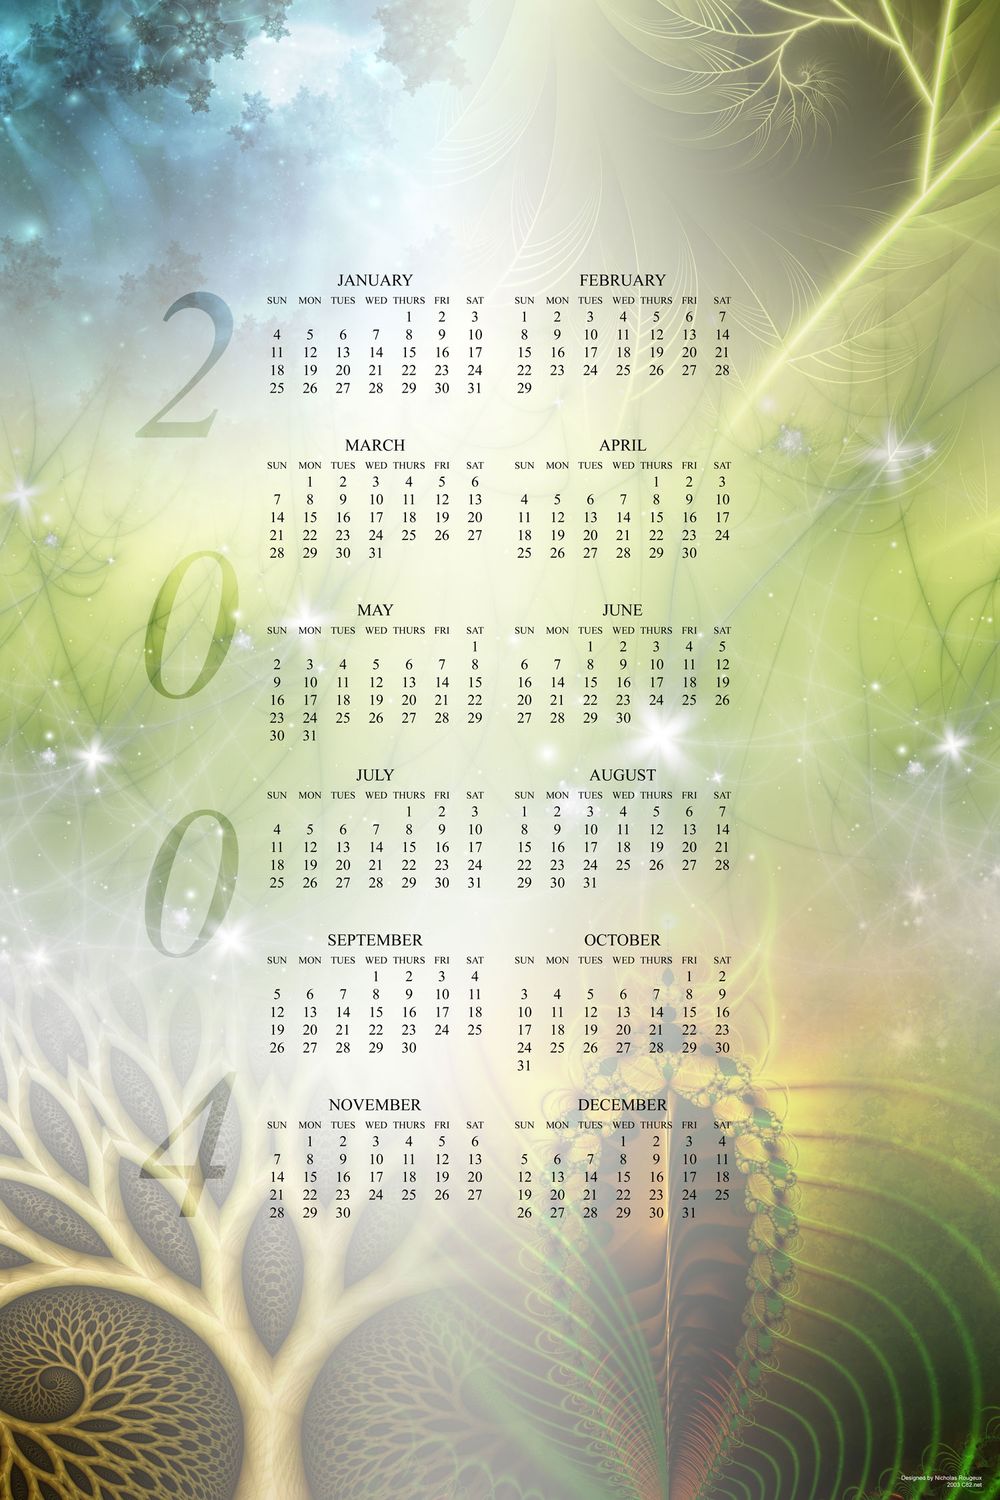 2004 Fractal Calendar II